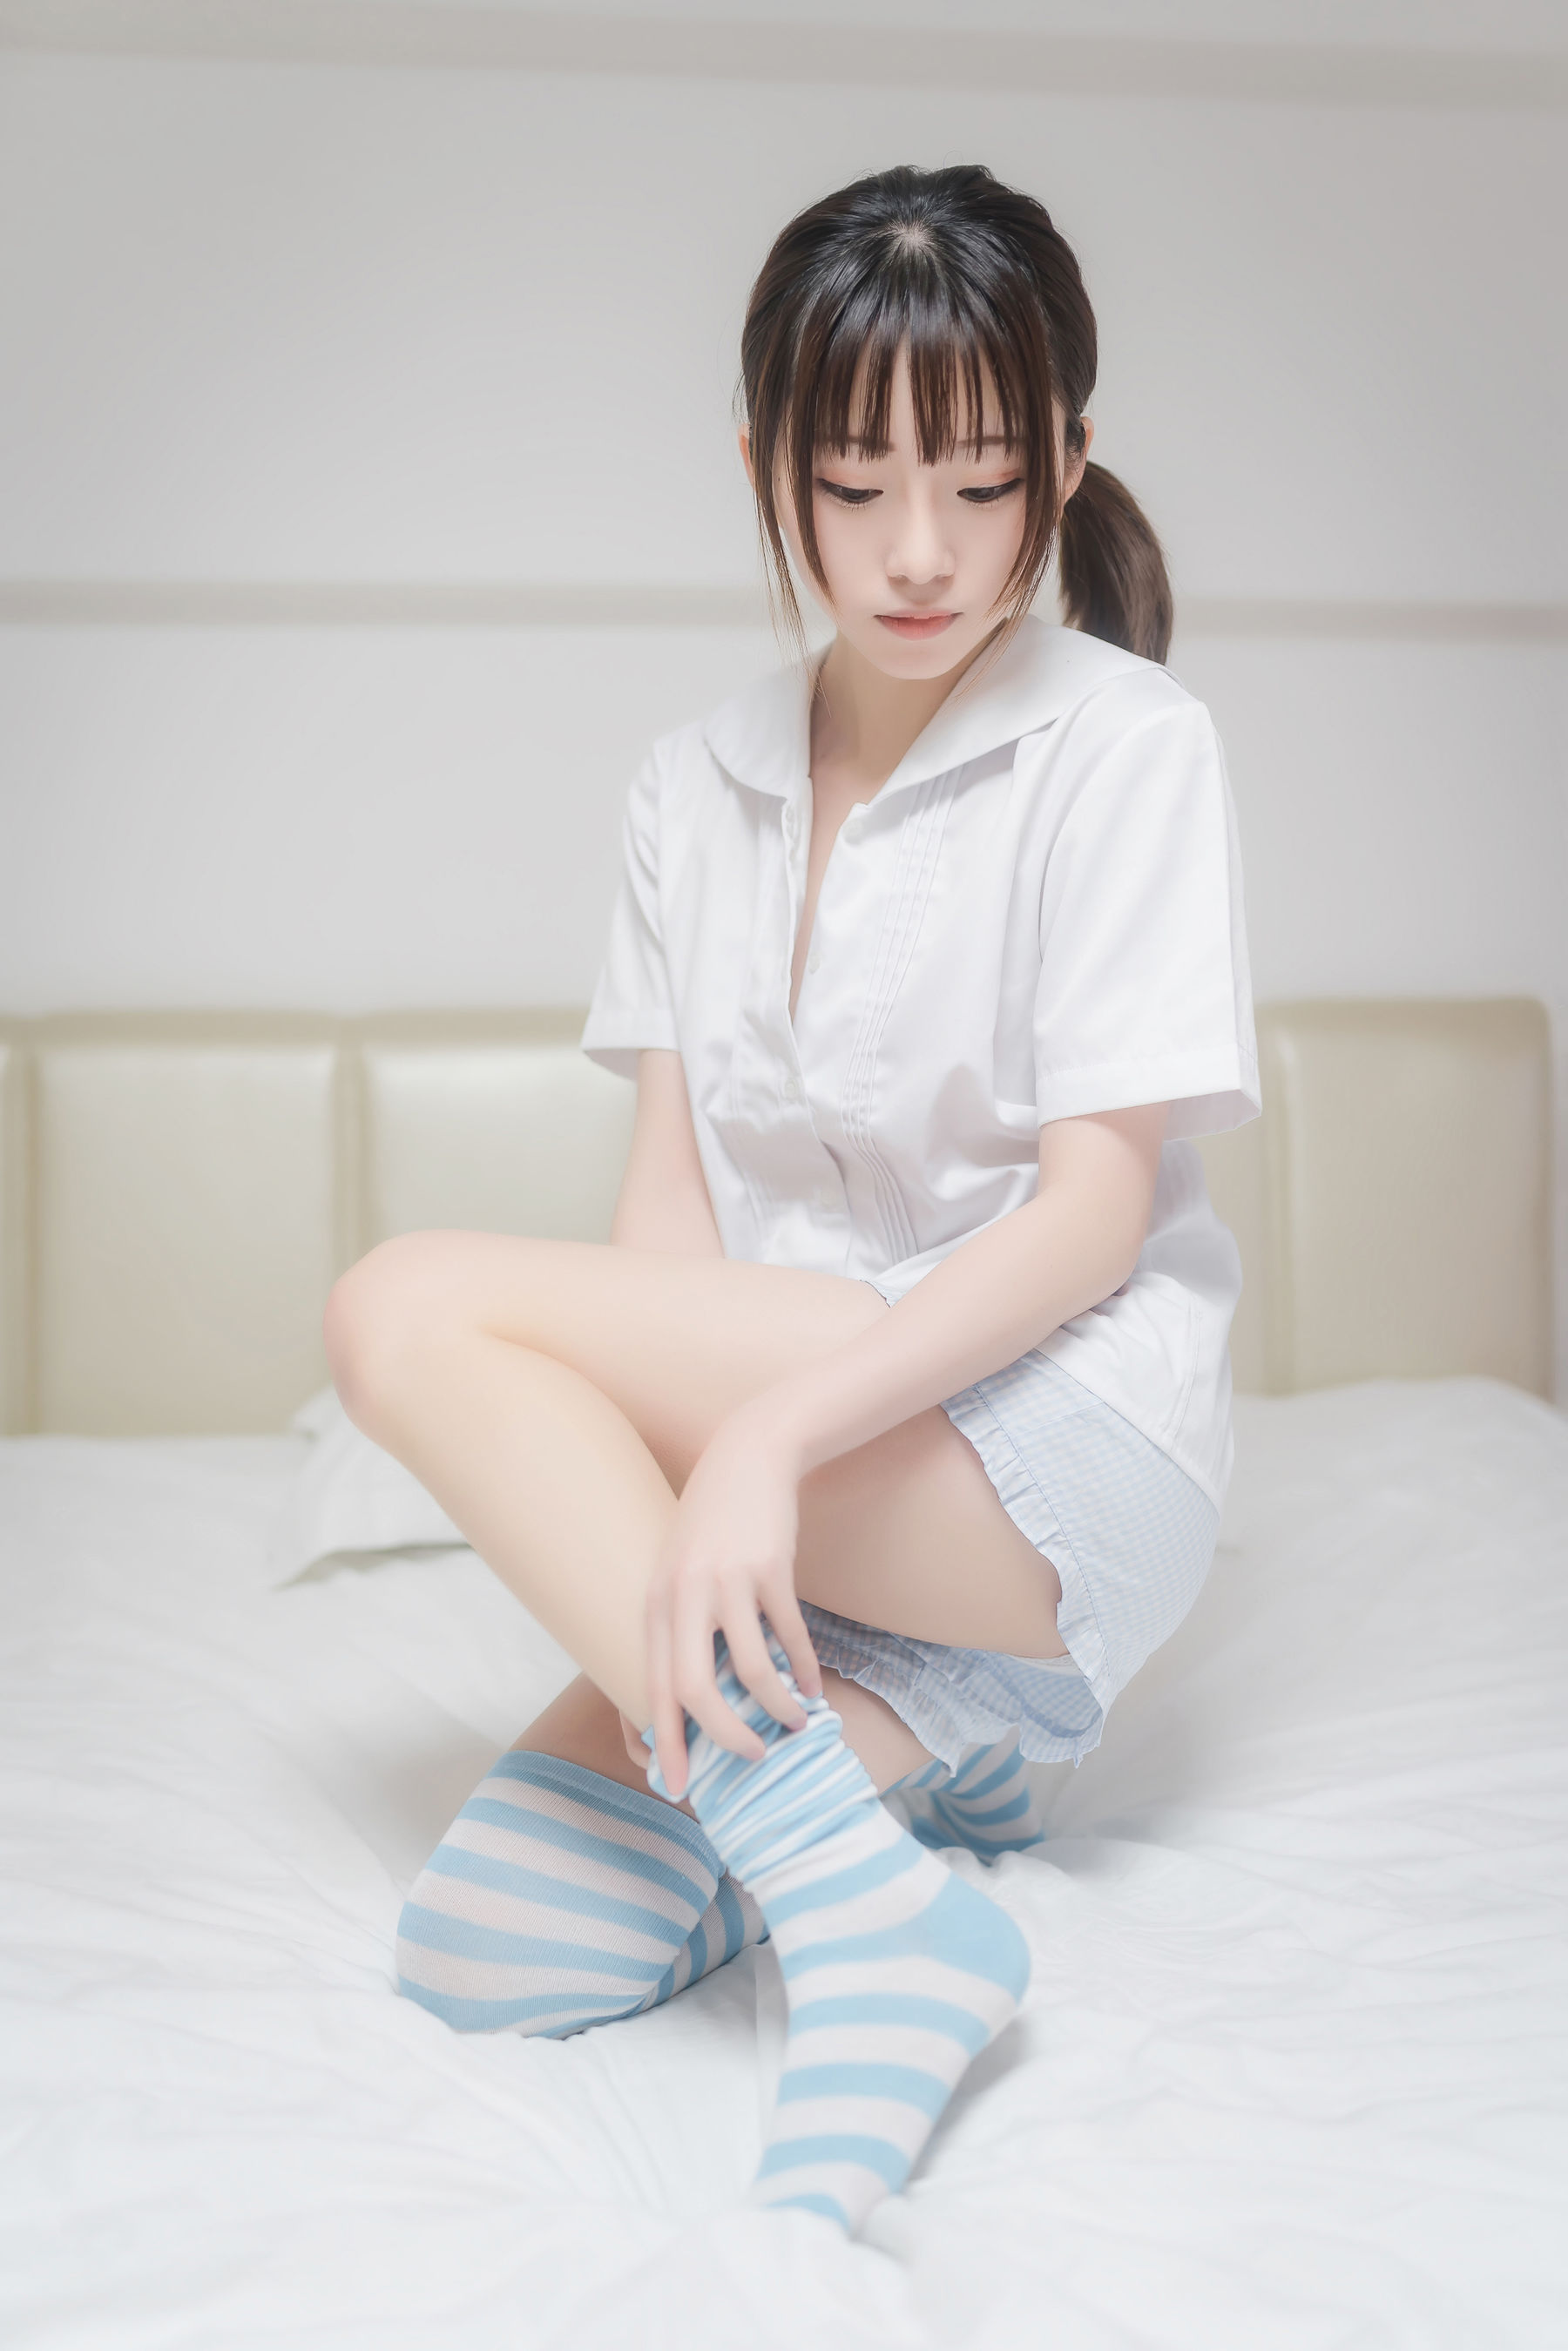 [Cosplay] 动漫博主Kitaro_绮太郎 - 蓝白条纹袜